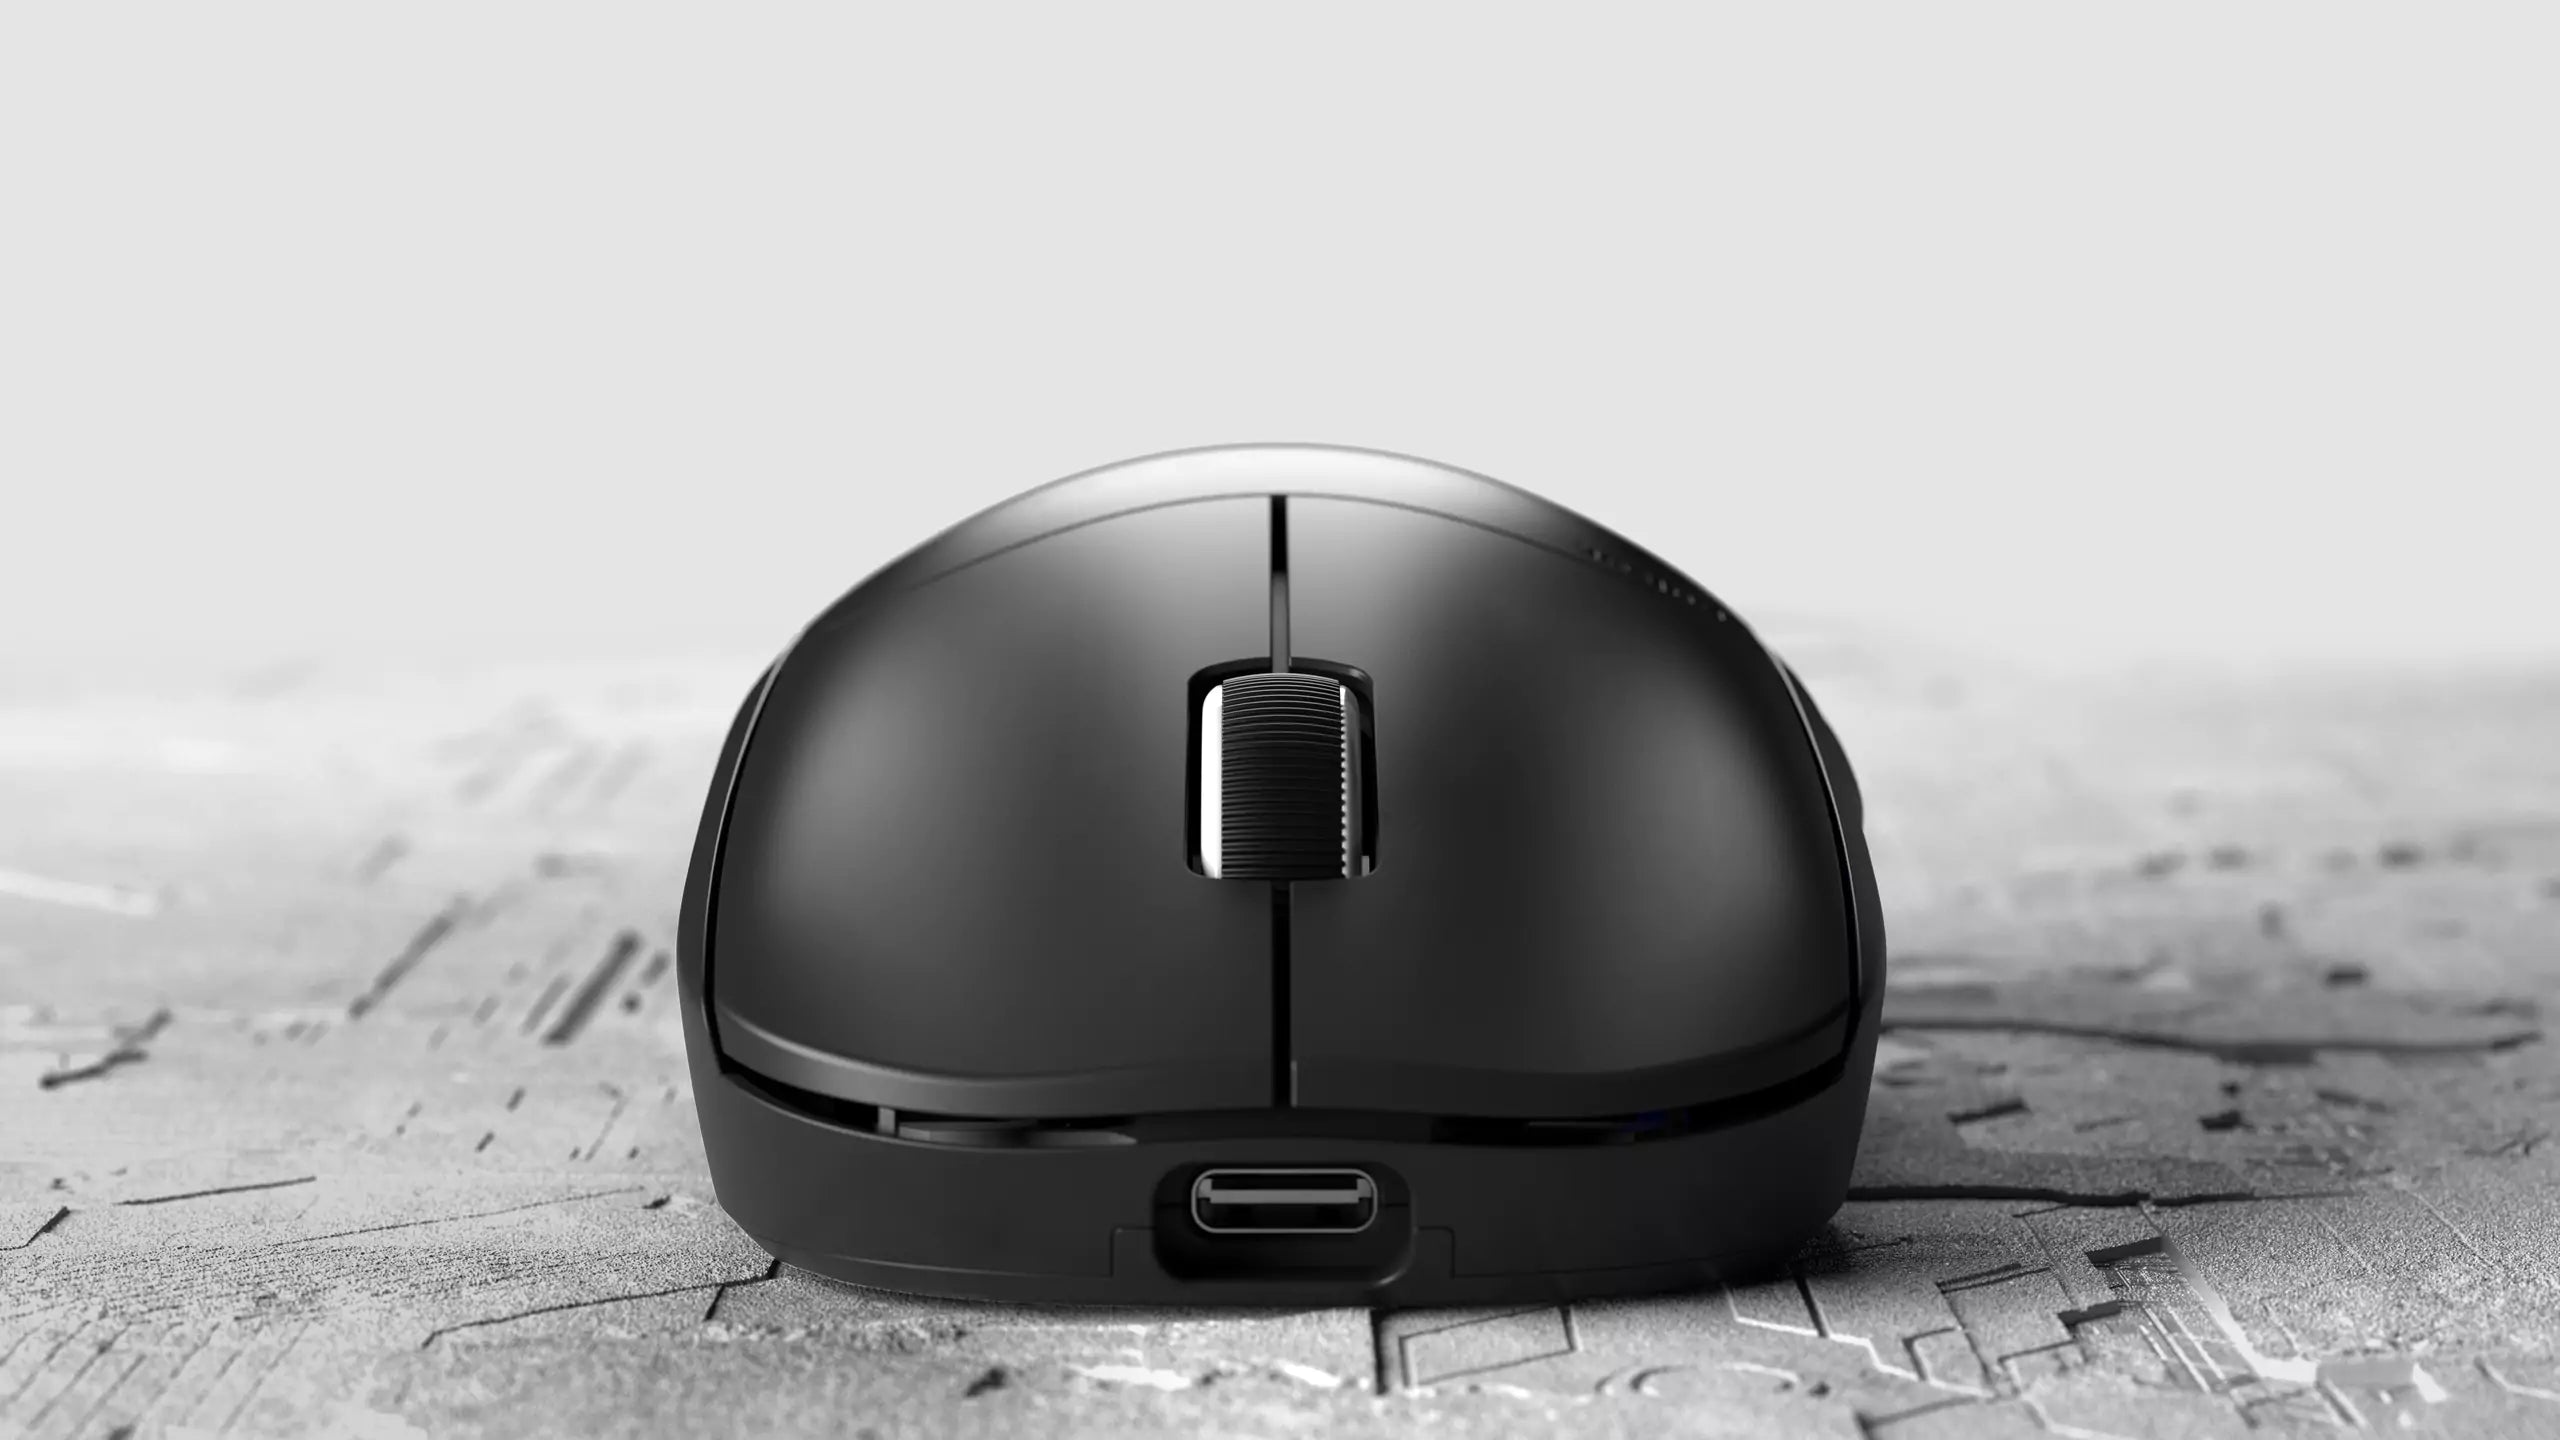 Premium Black Edition] X2 Mini Gaming Mouse – Pulsar Gaming Gears